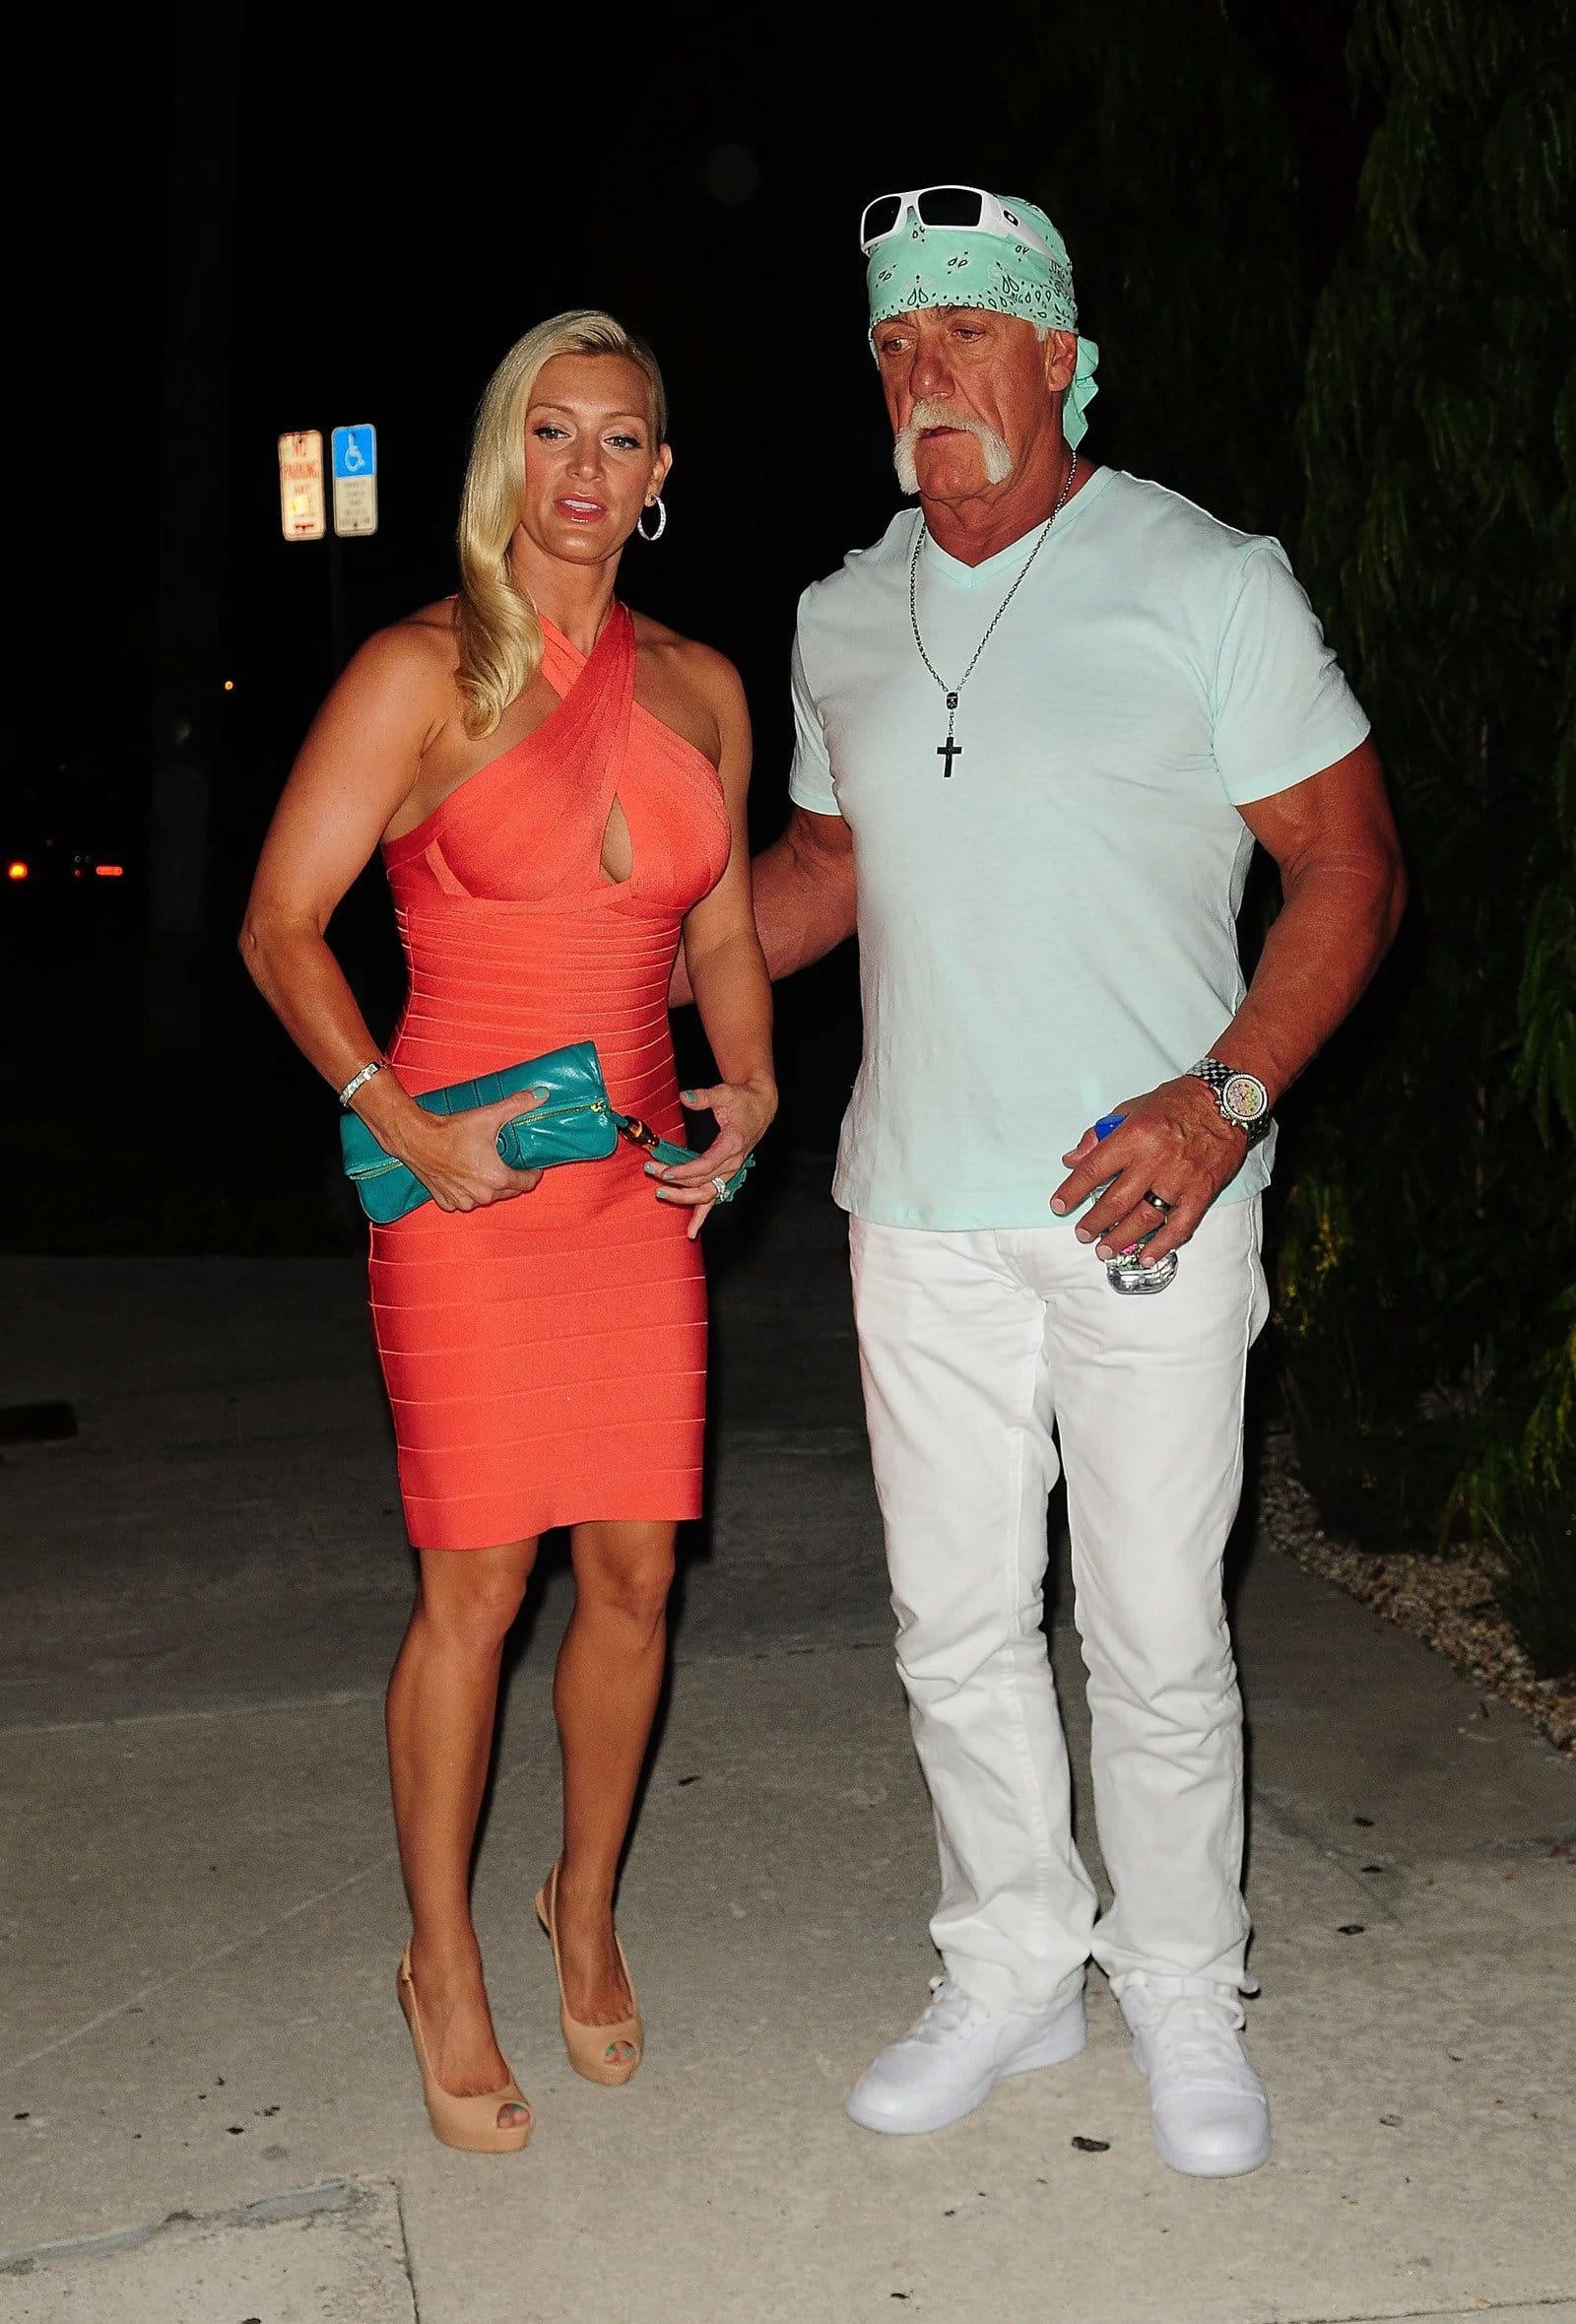 Hulk Hogan with his wife Jennifer